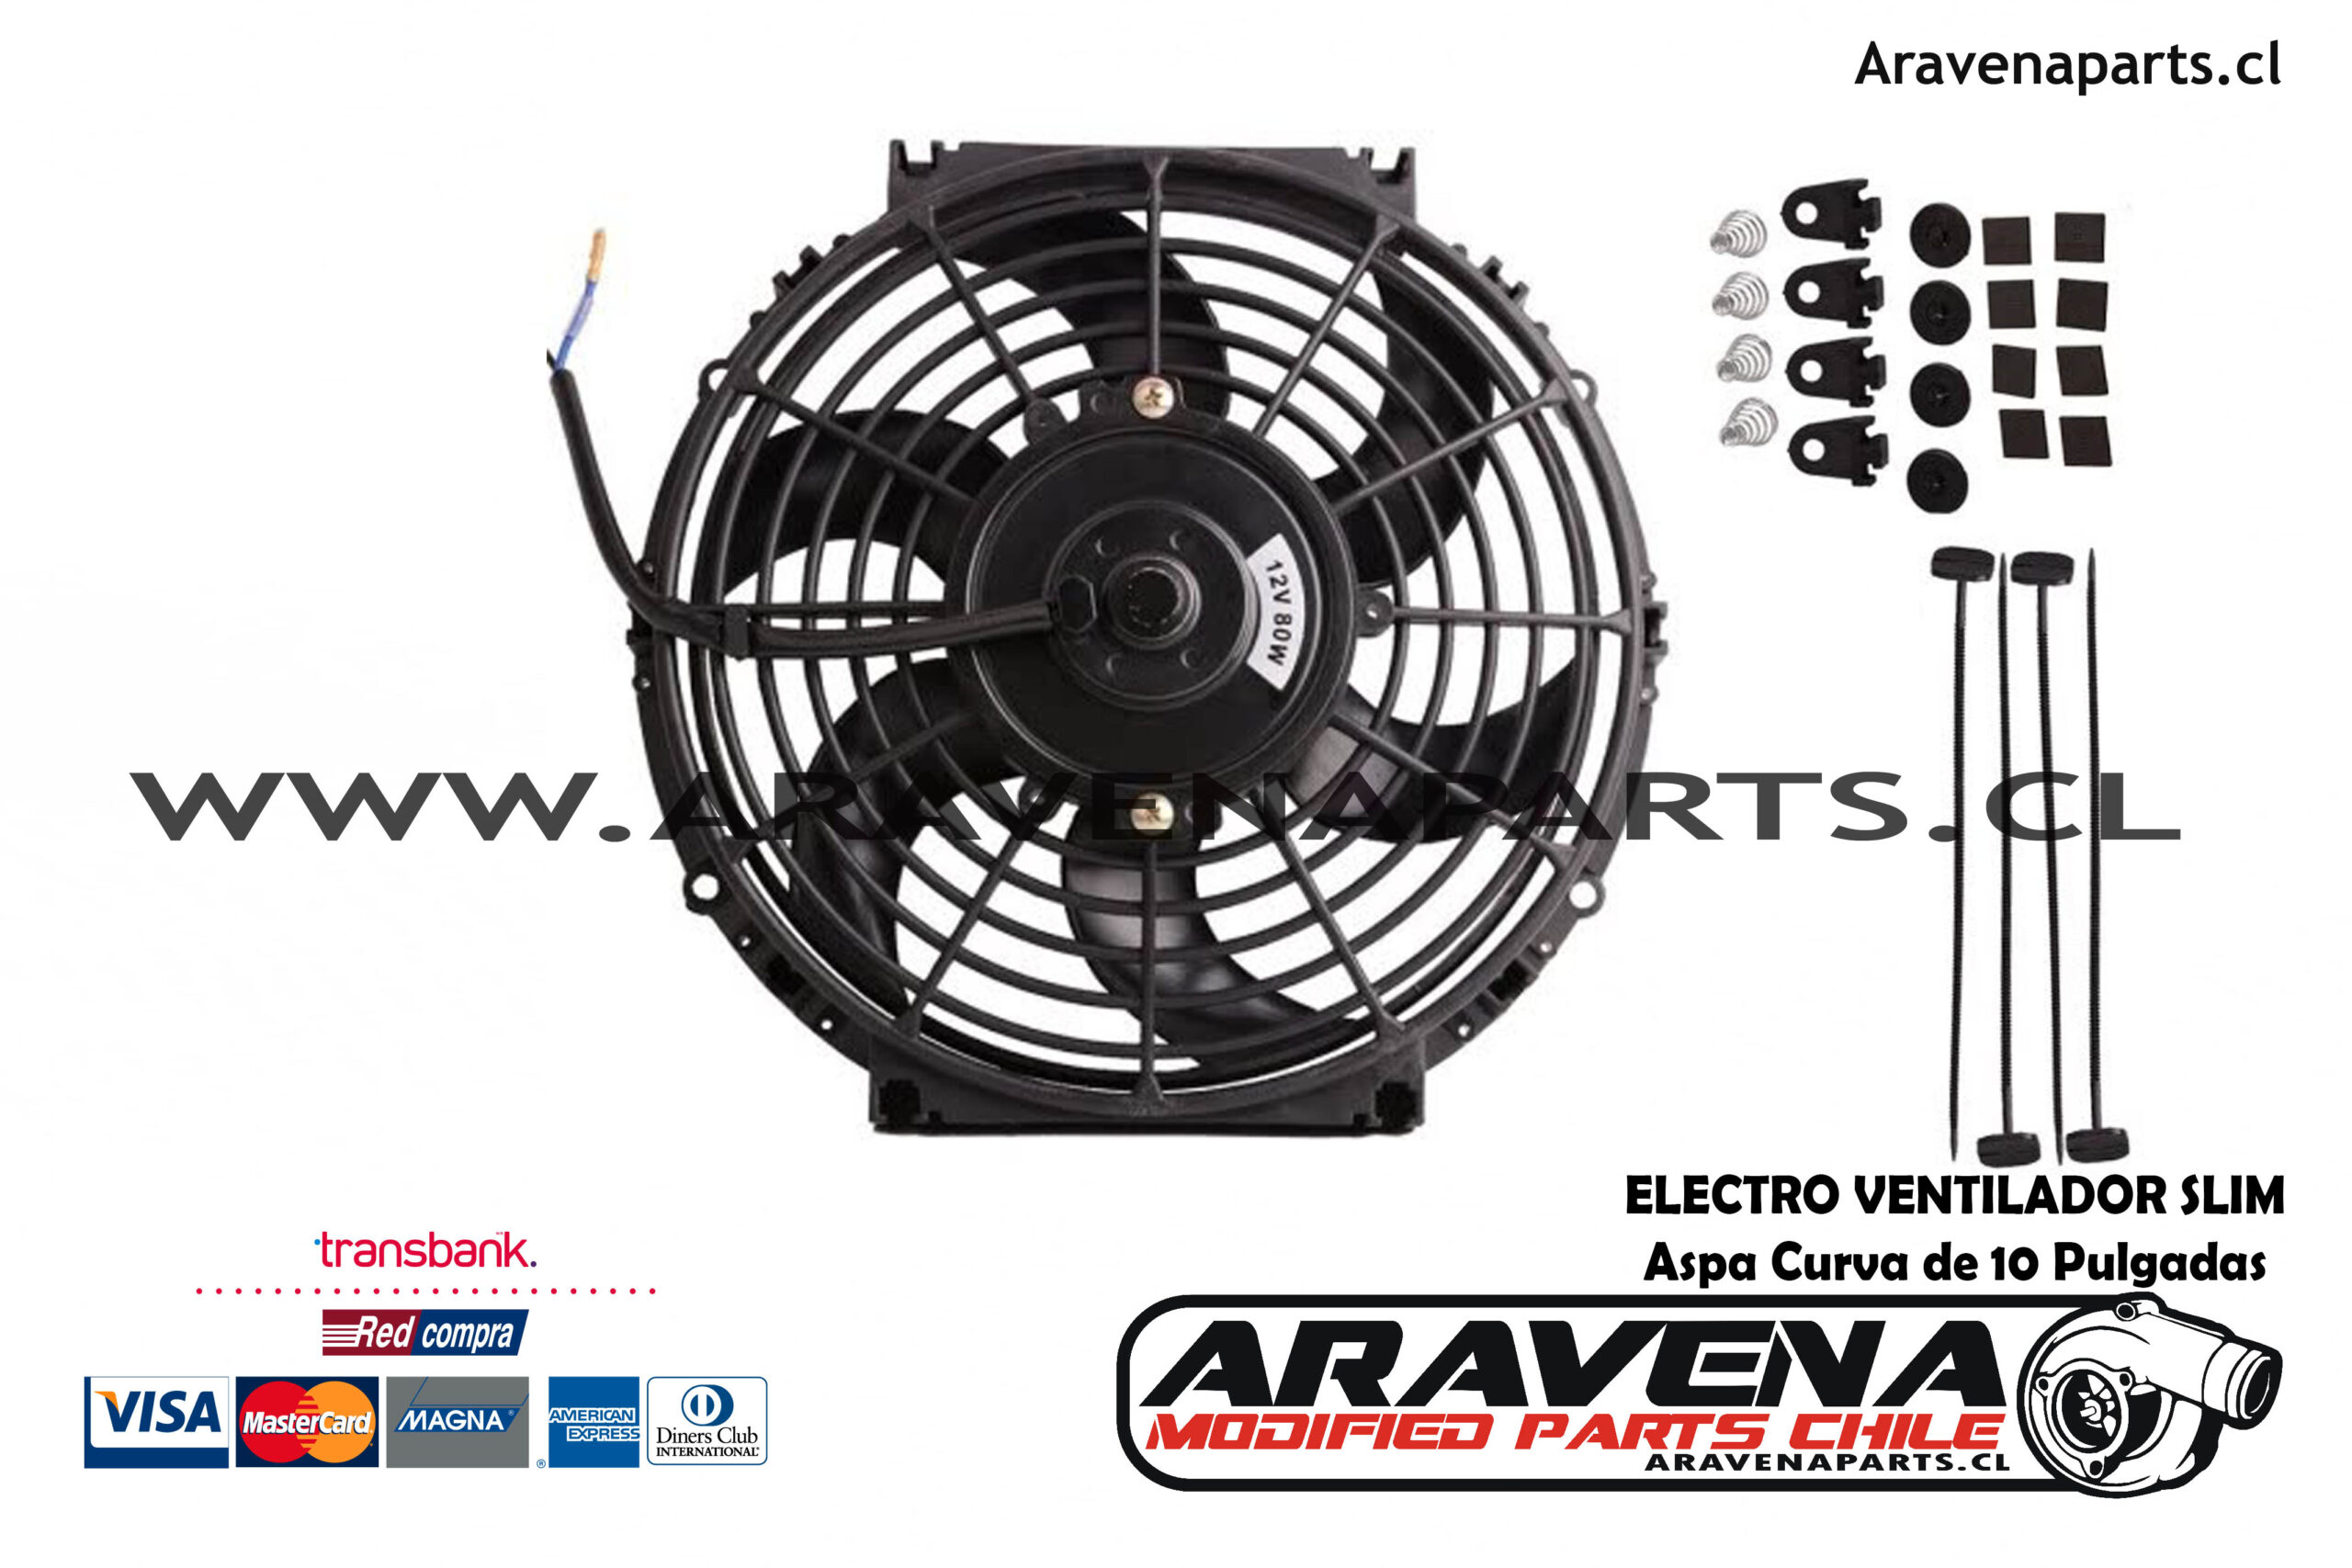 ingeniero Hamburguesa Cabeza Electro Ventilador Slim de 10" 80W Aspa Curva - Aravena Parts